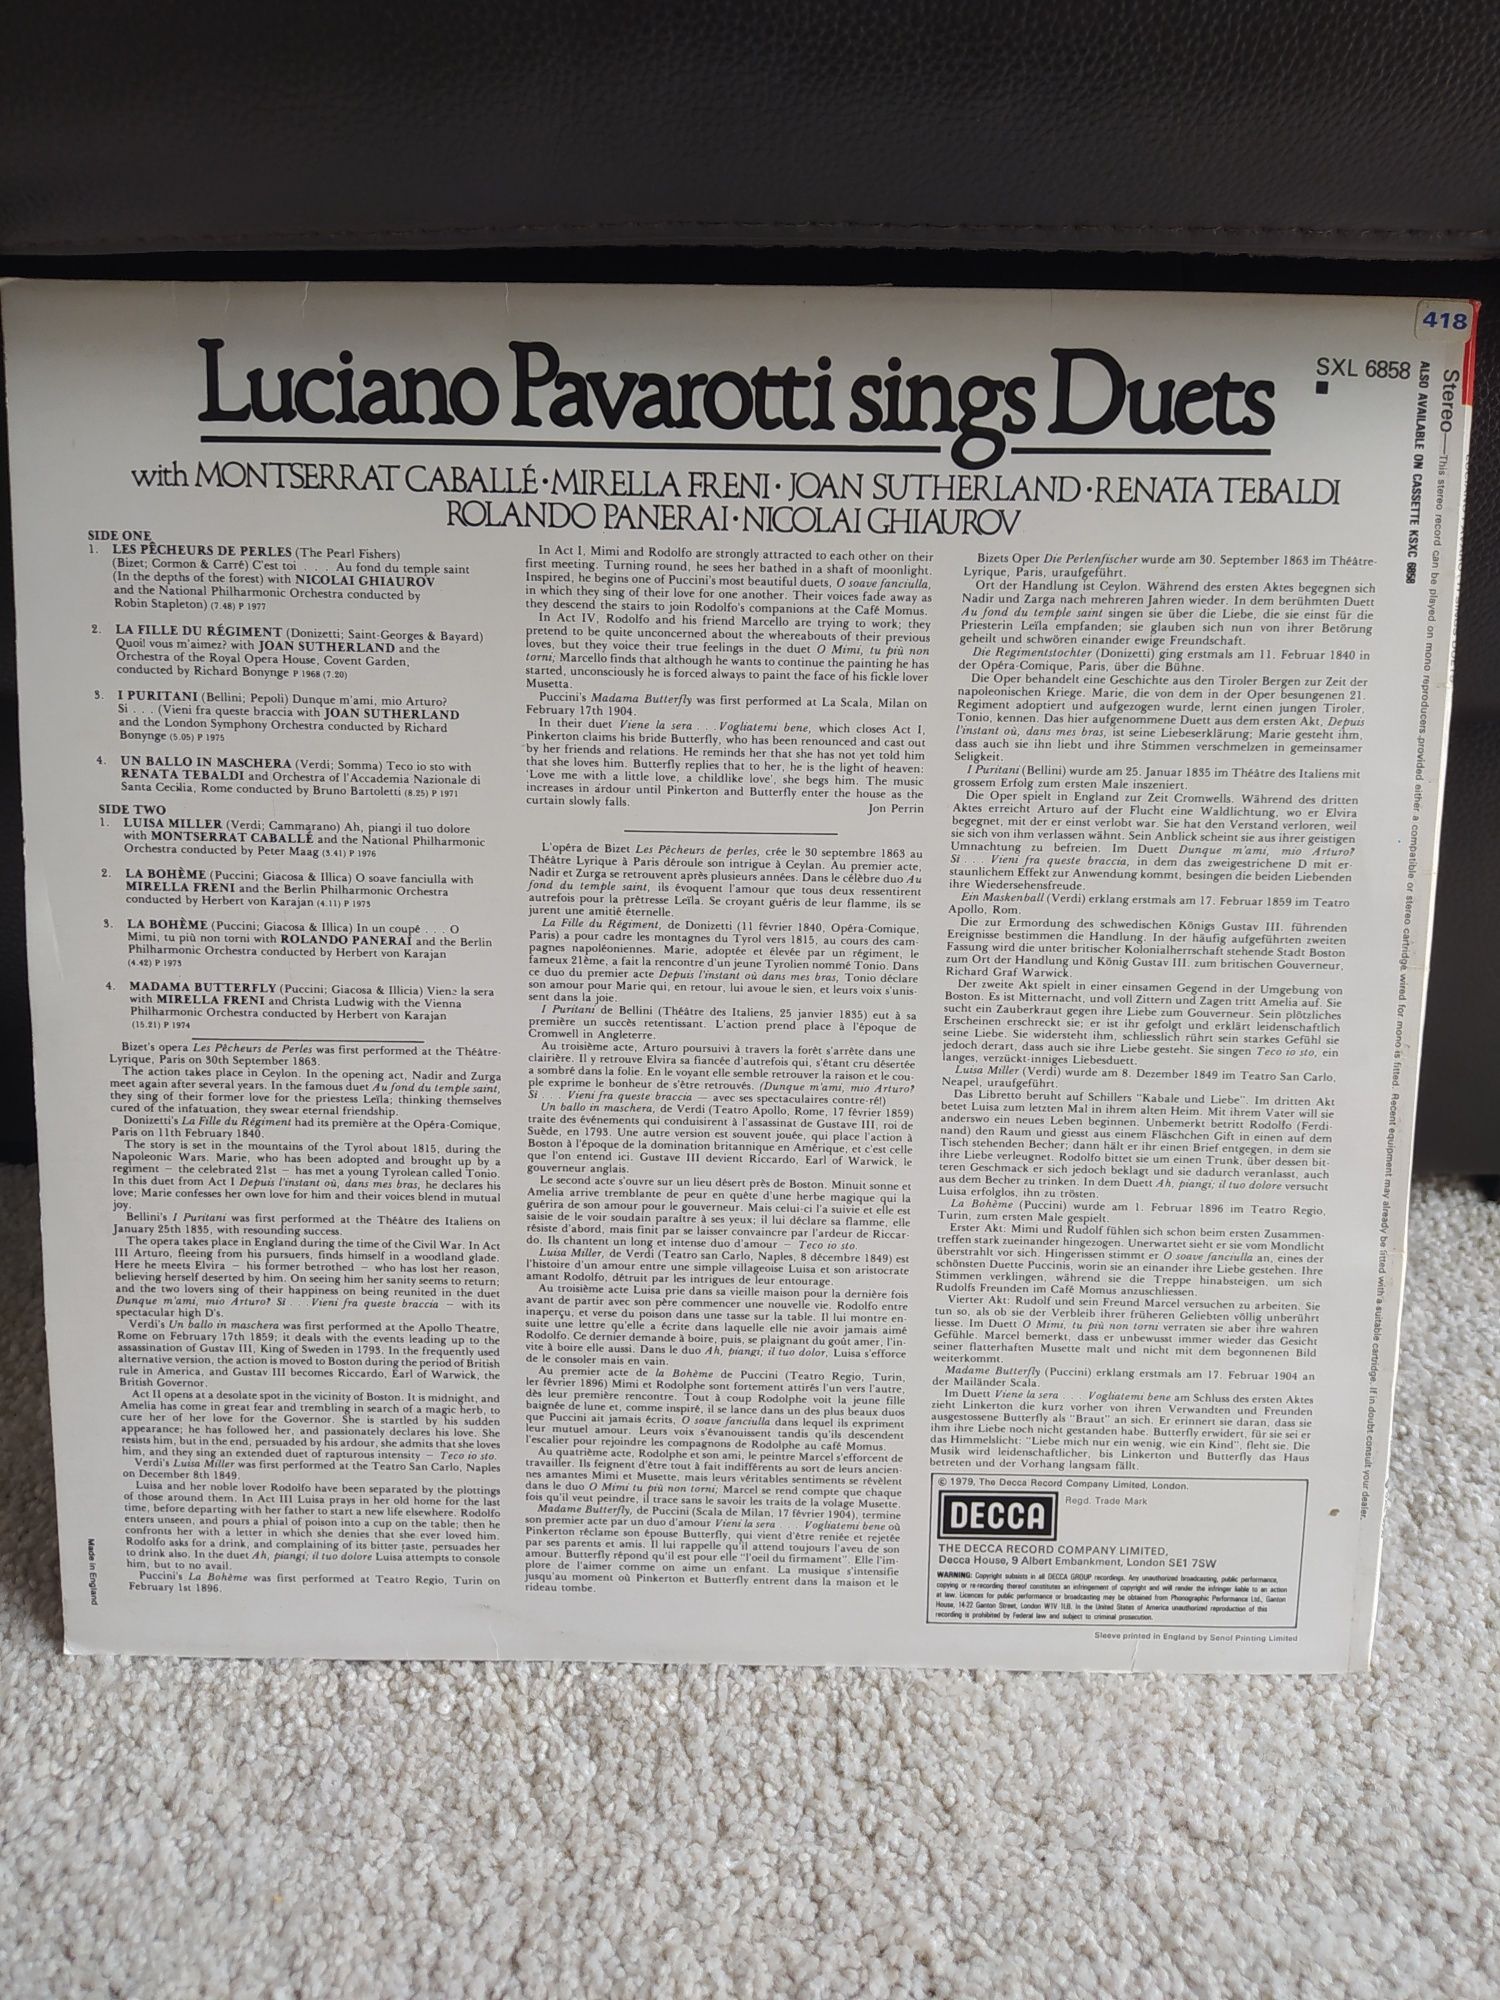 Płyta winylowa "Luciano Pavarotti sings Duets"